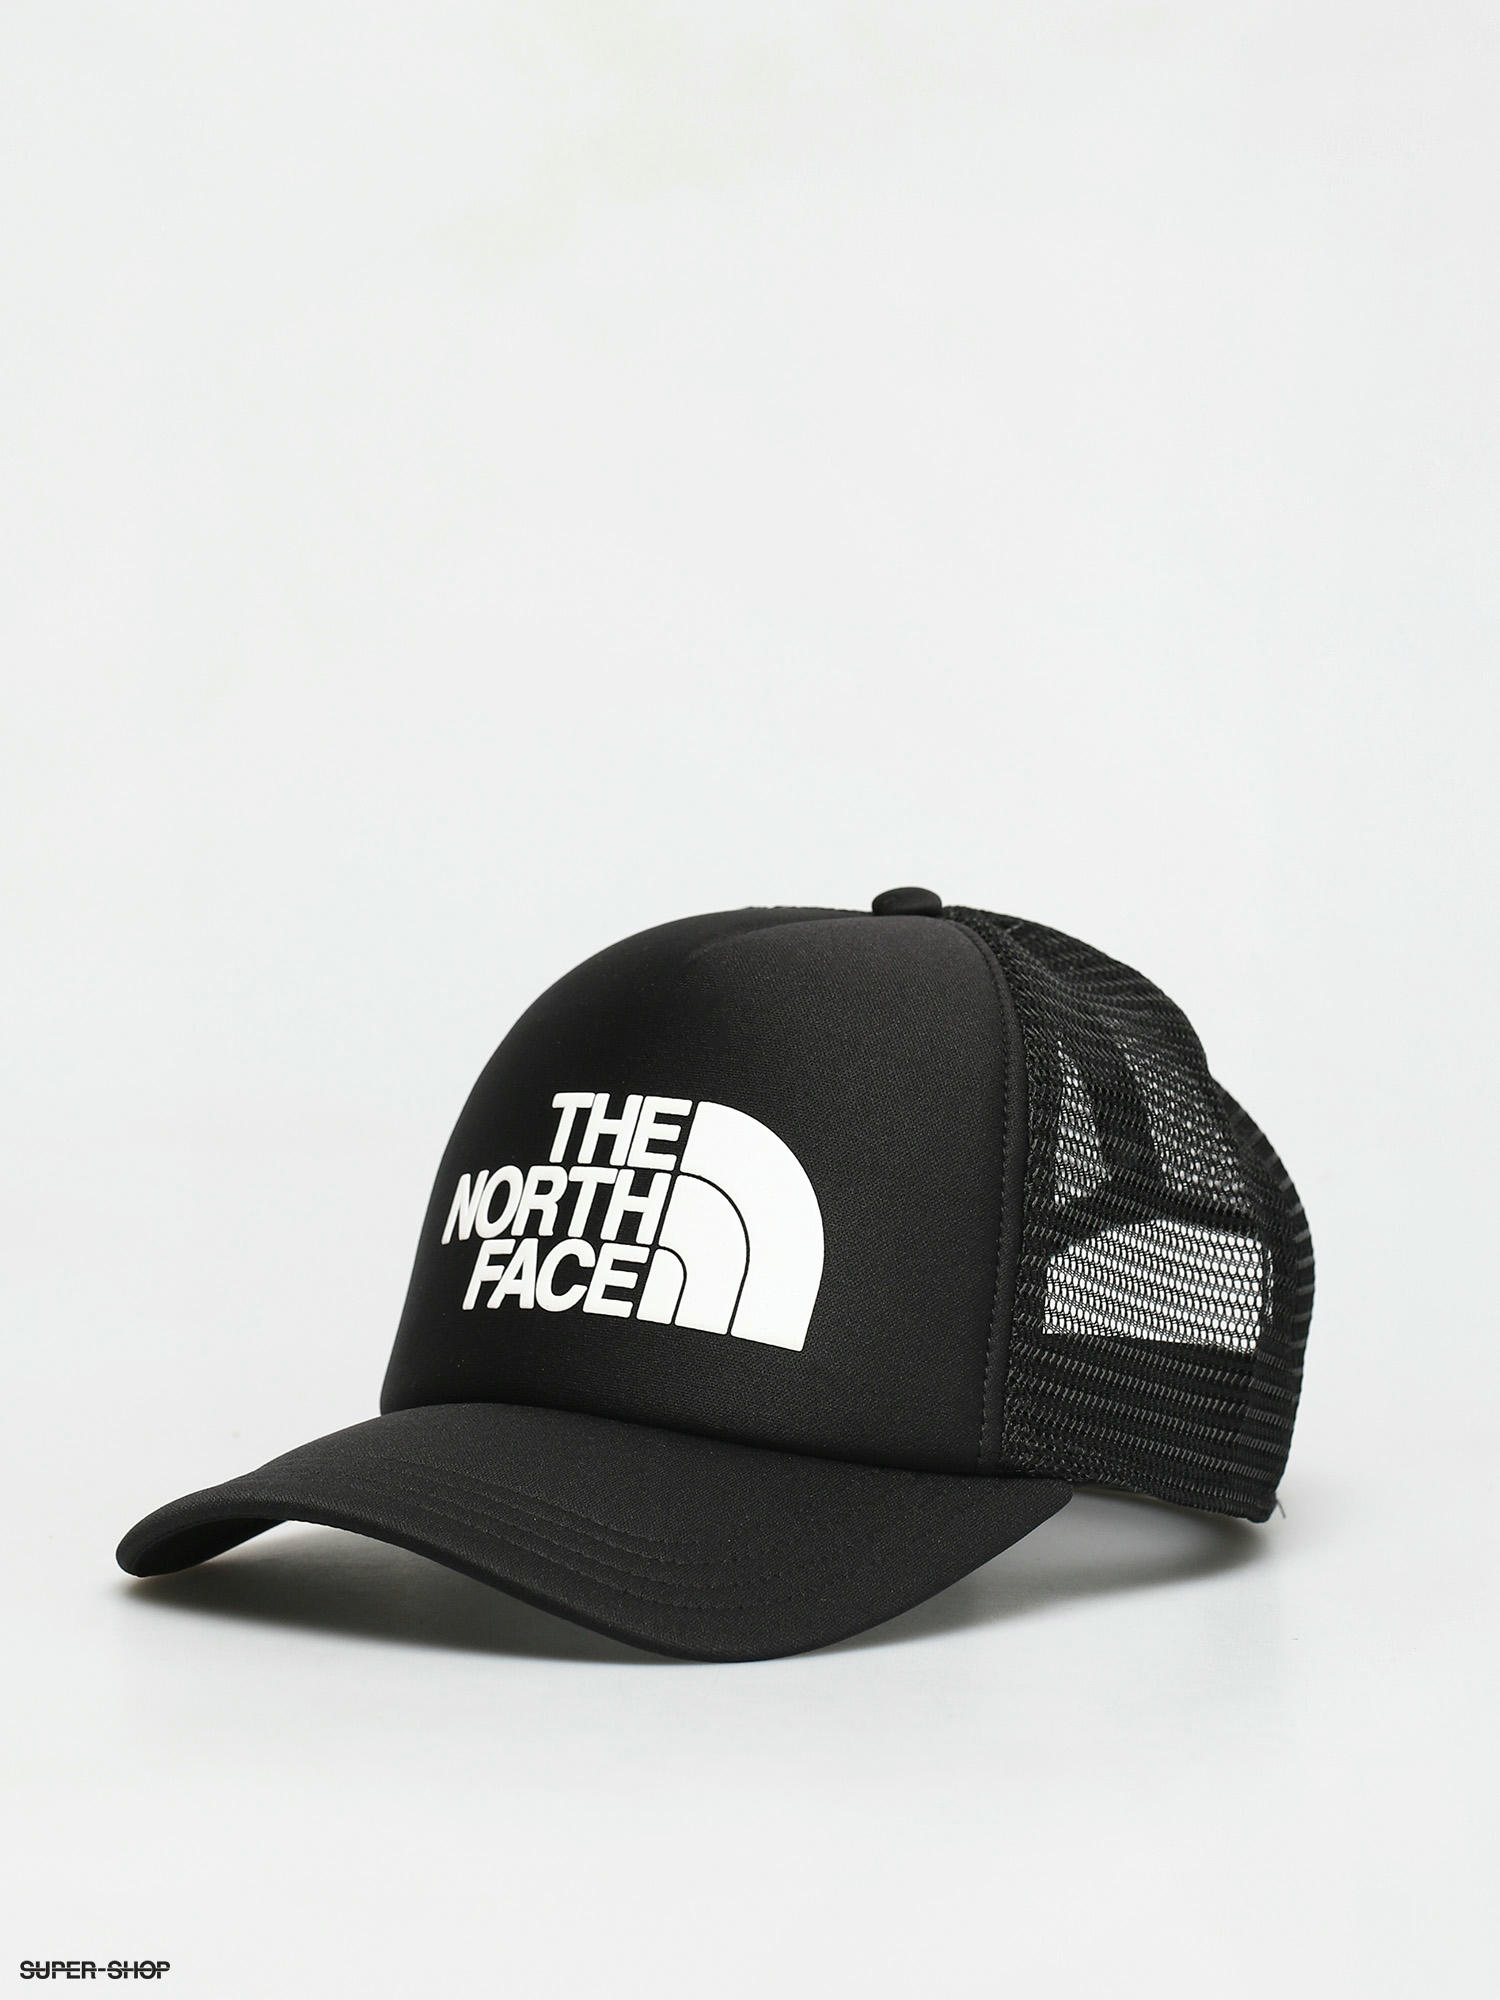 north face trucker hat black